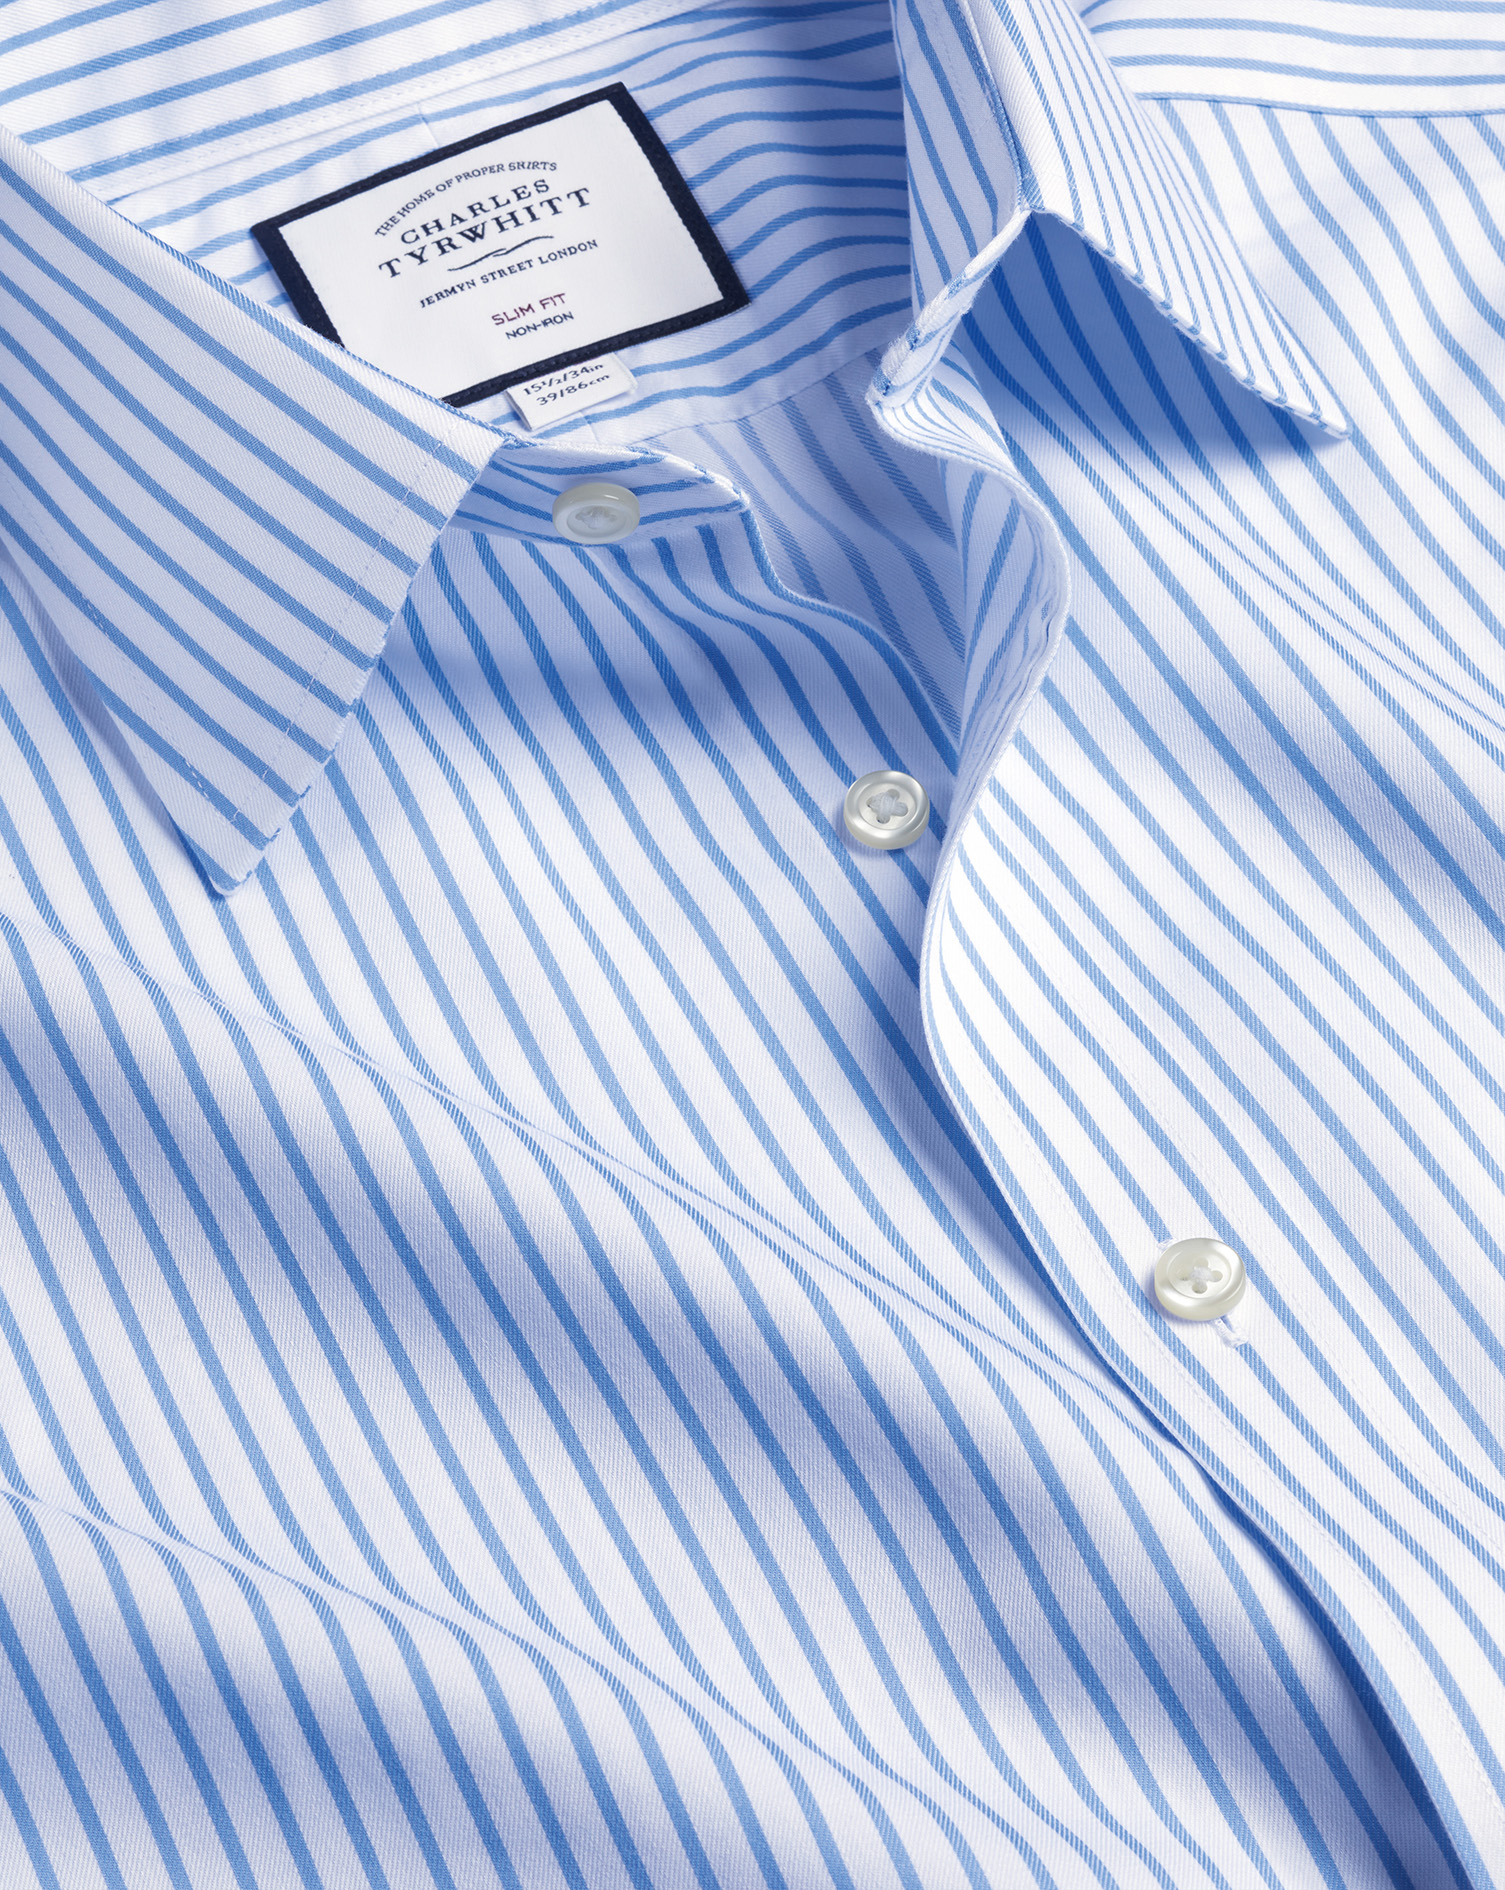 Men's Charles Tyrwhitt Non-Iron Twill Stripe Dress Shirt - Cornflower Blue Single Cuff Size XXXL Cot